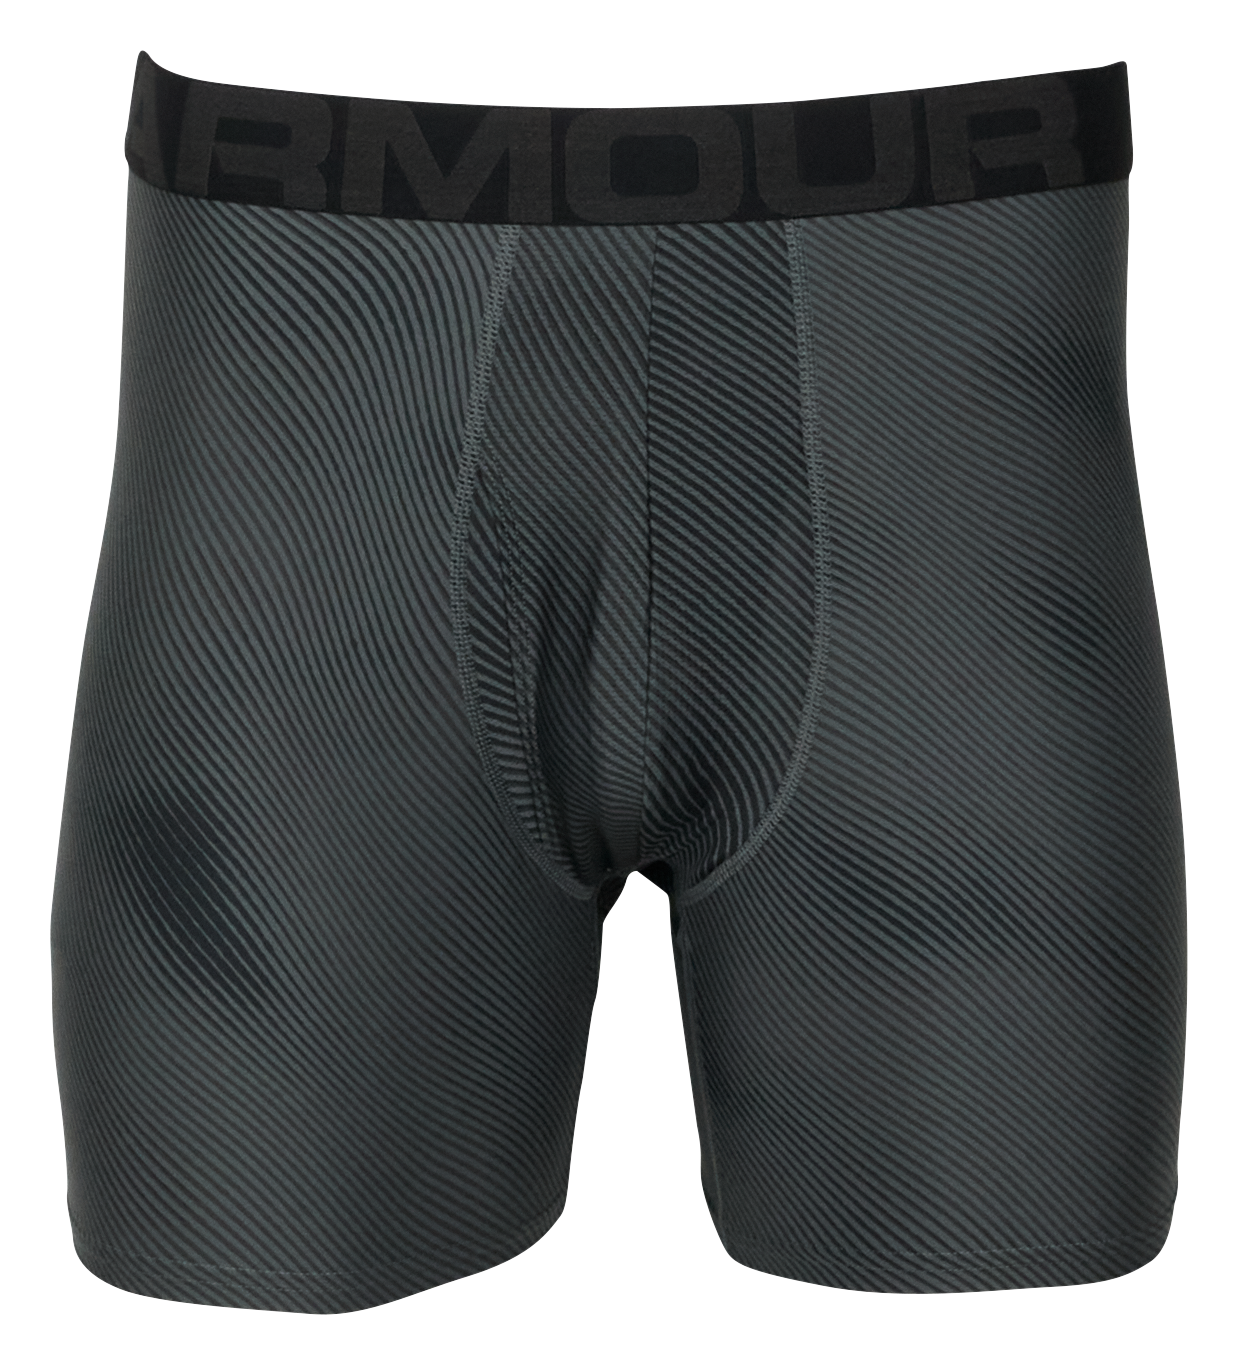 Under Armour Tech 6"" Patterned Boxerjock Shorts for Men - Pitch/Jet Gray - L